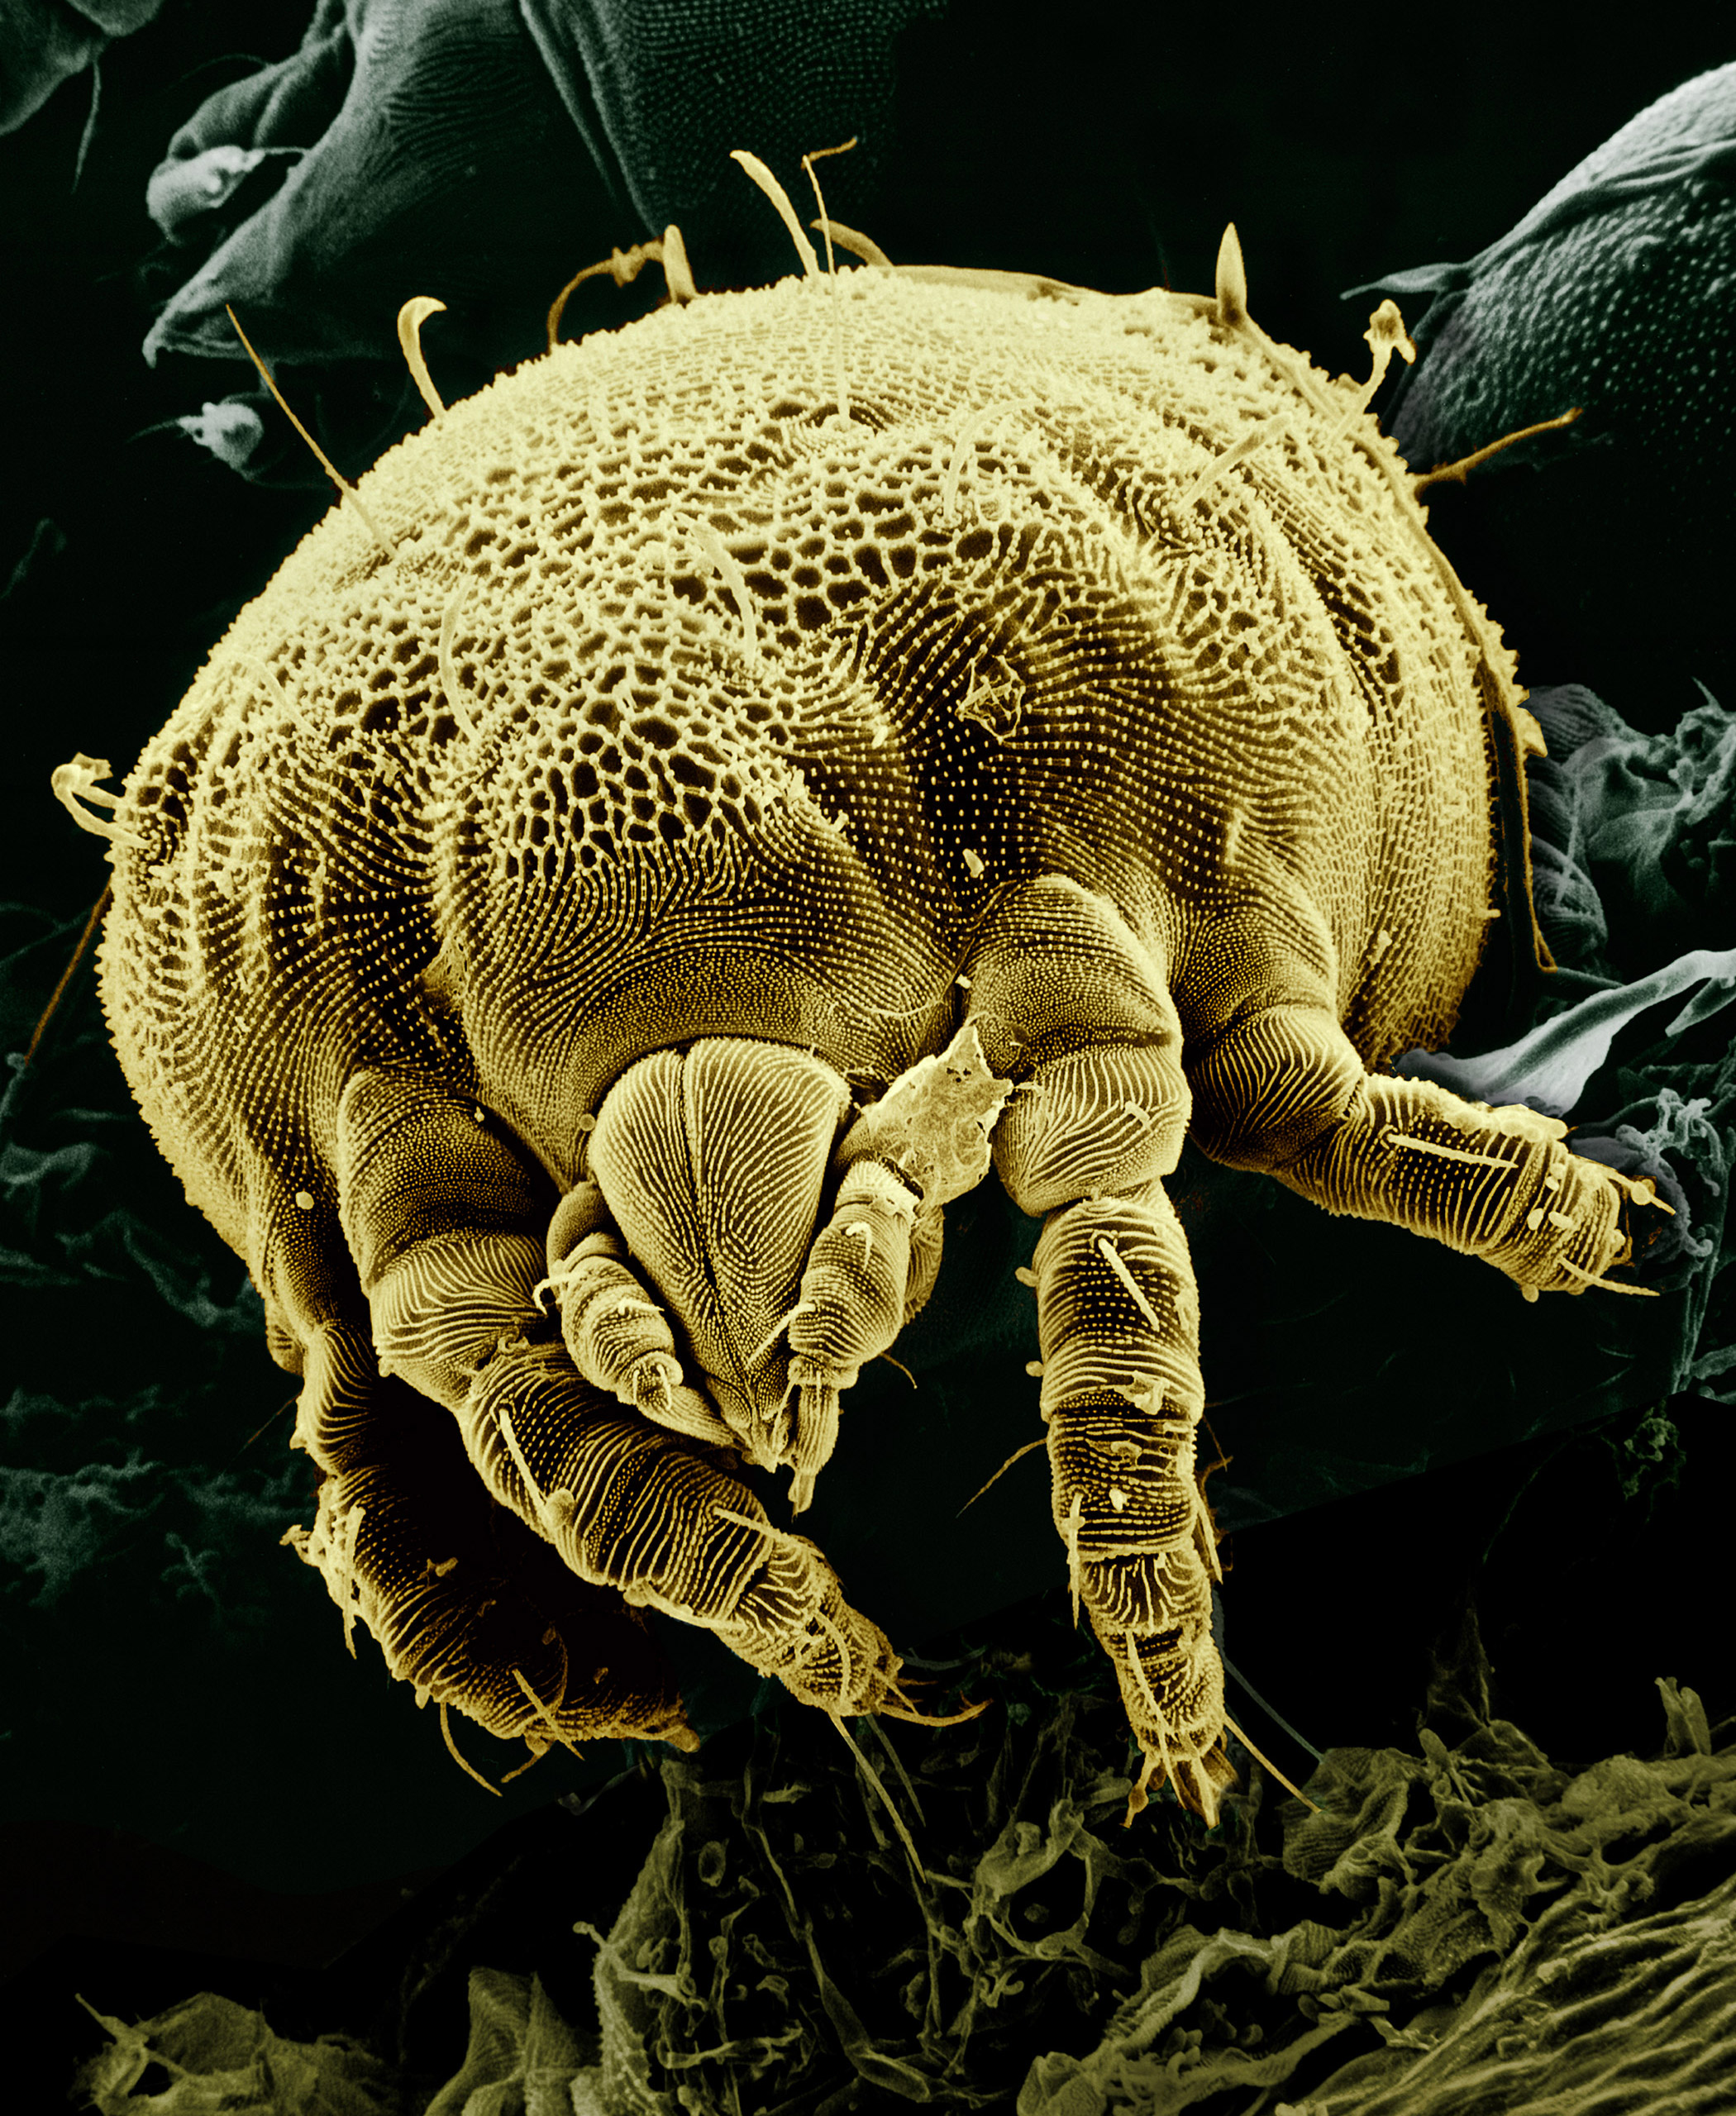 File:Yellow mite (Tydeidae) Lorryia formosa 2 edit.jpg - Wikipedia